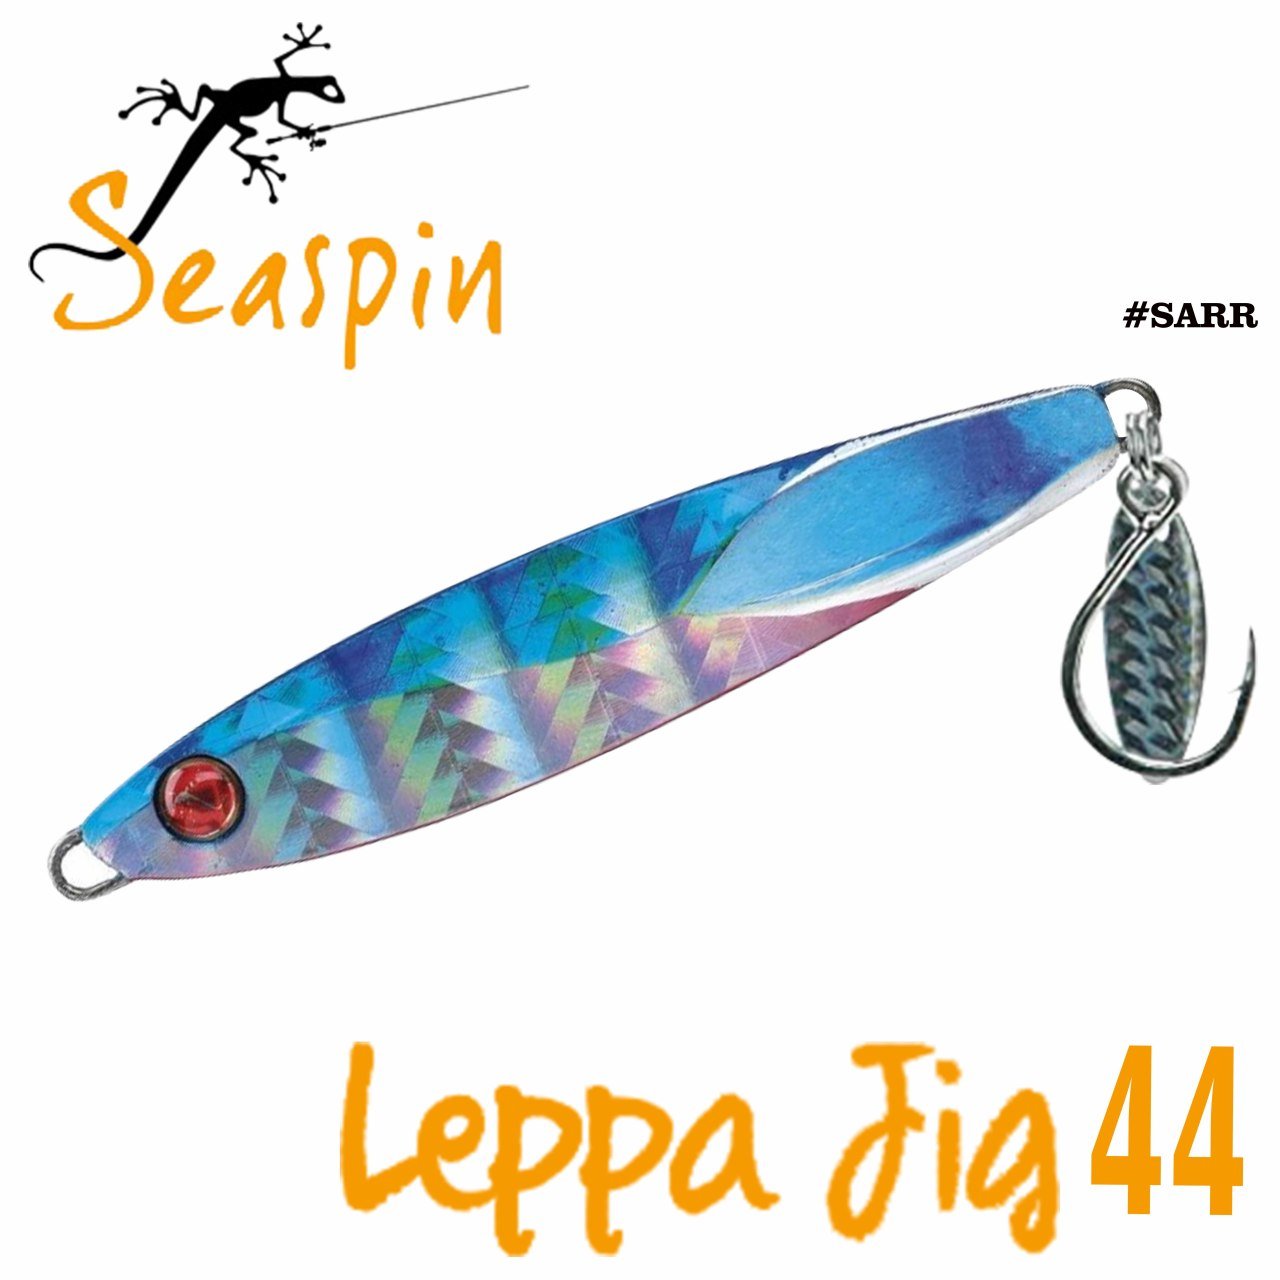 Seaspin Leppa 44gr jig yem #SARR